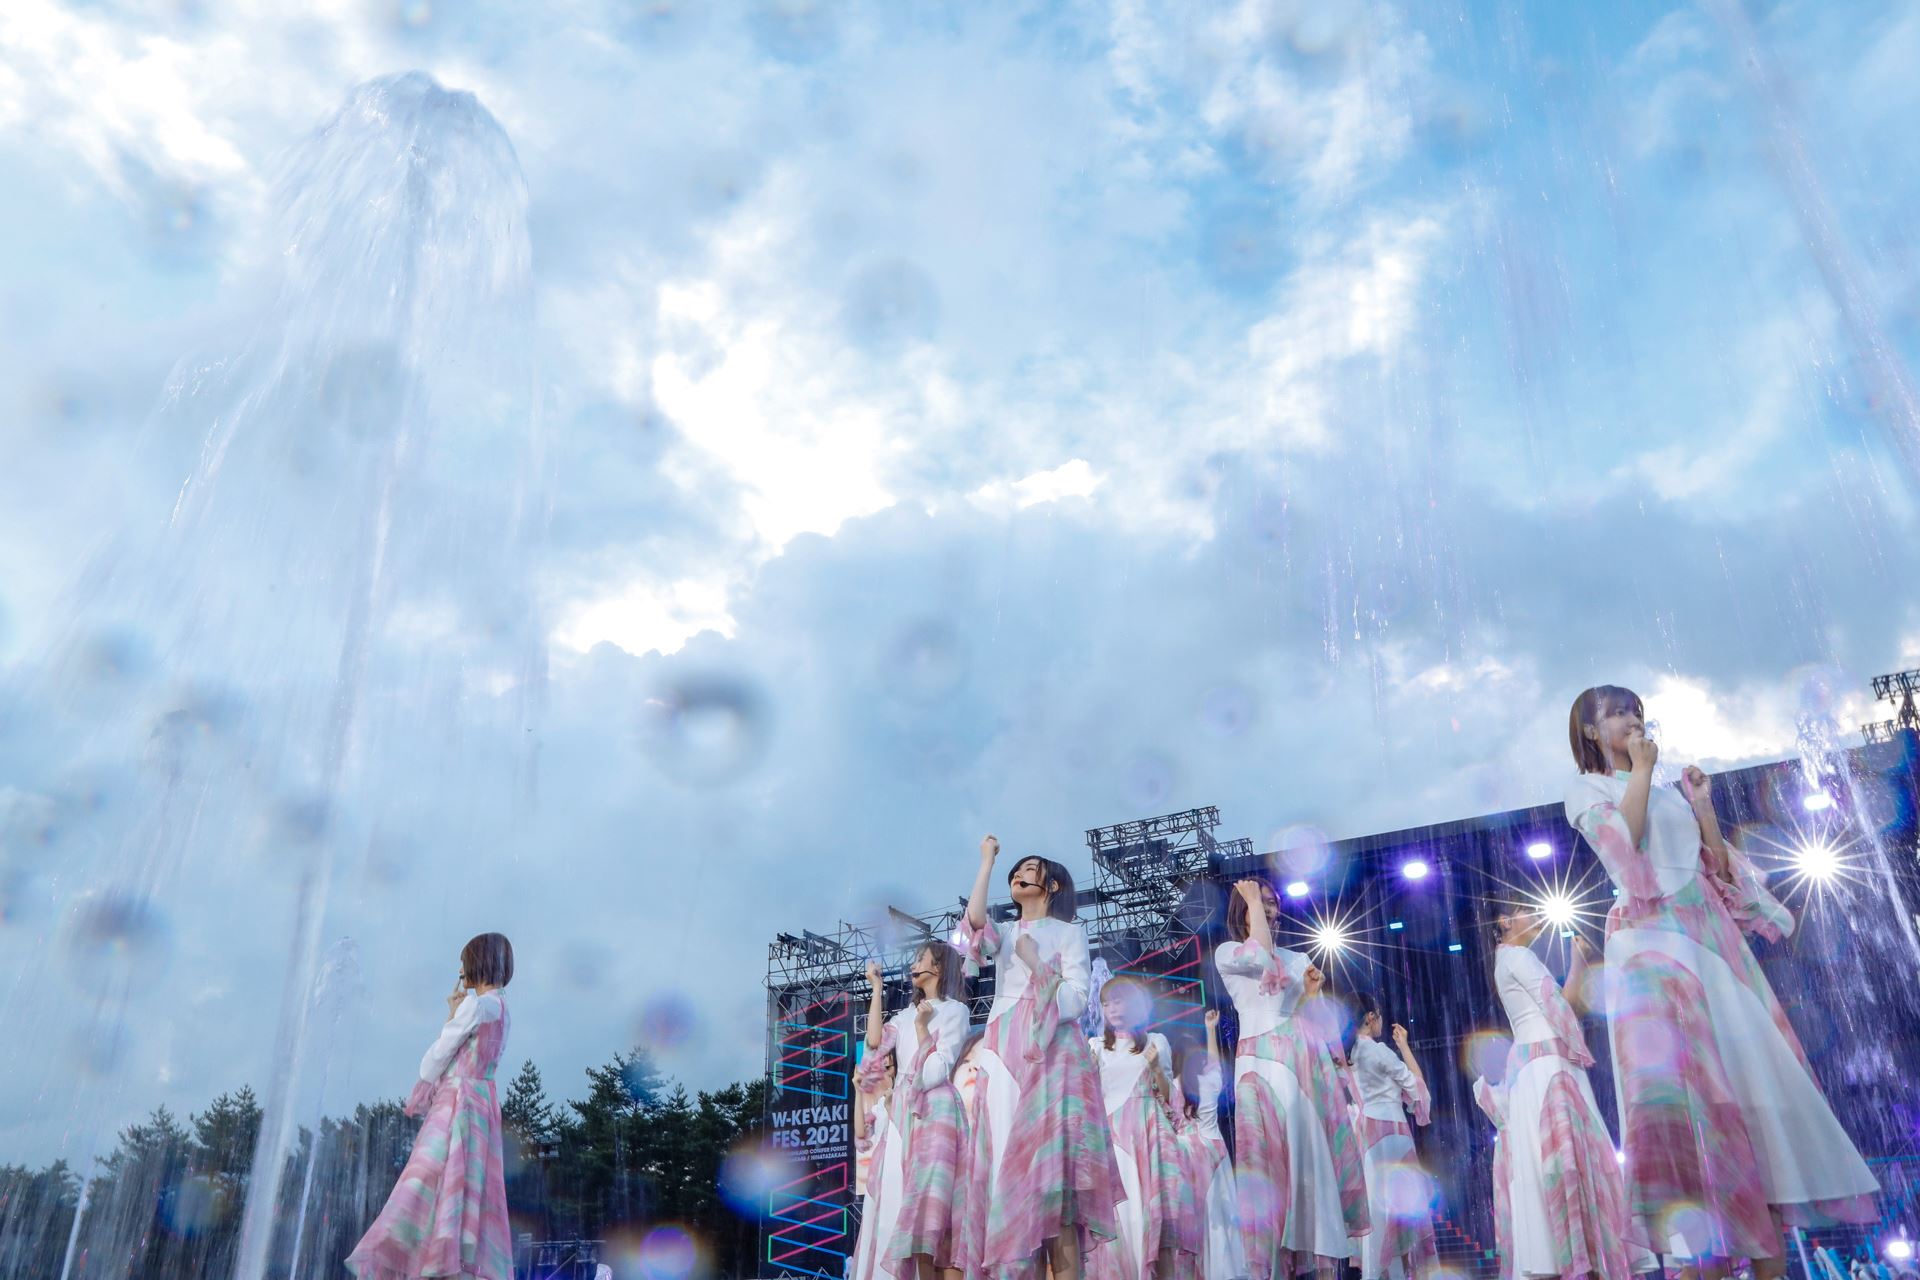 『W-KEYAKI FES.2021』3日目 櫻坂46 / 日向坂46合同公演より （写真：上山陽介）